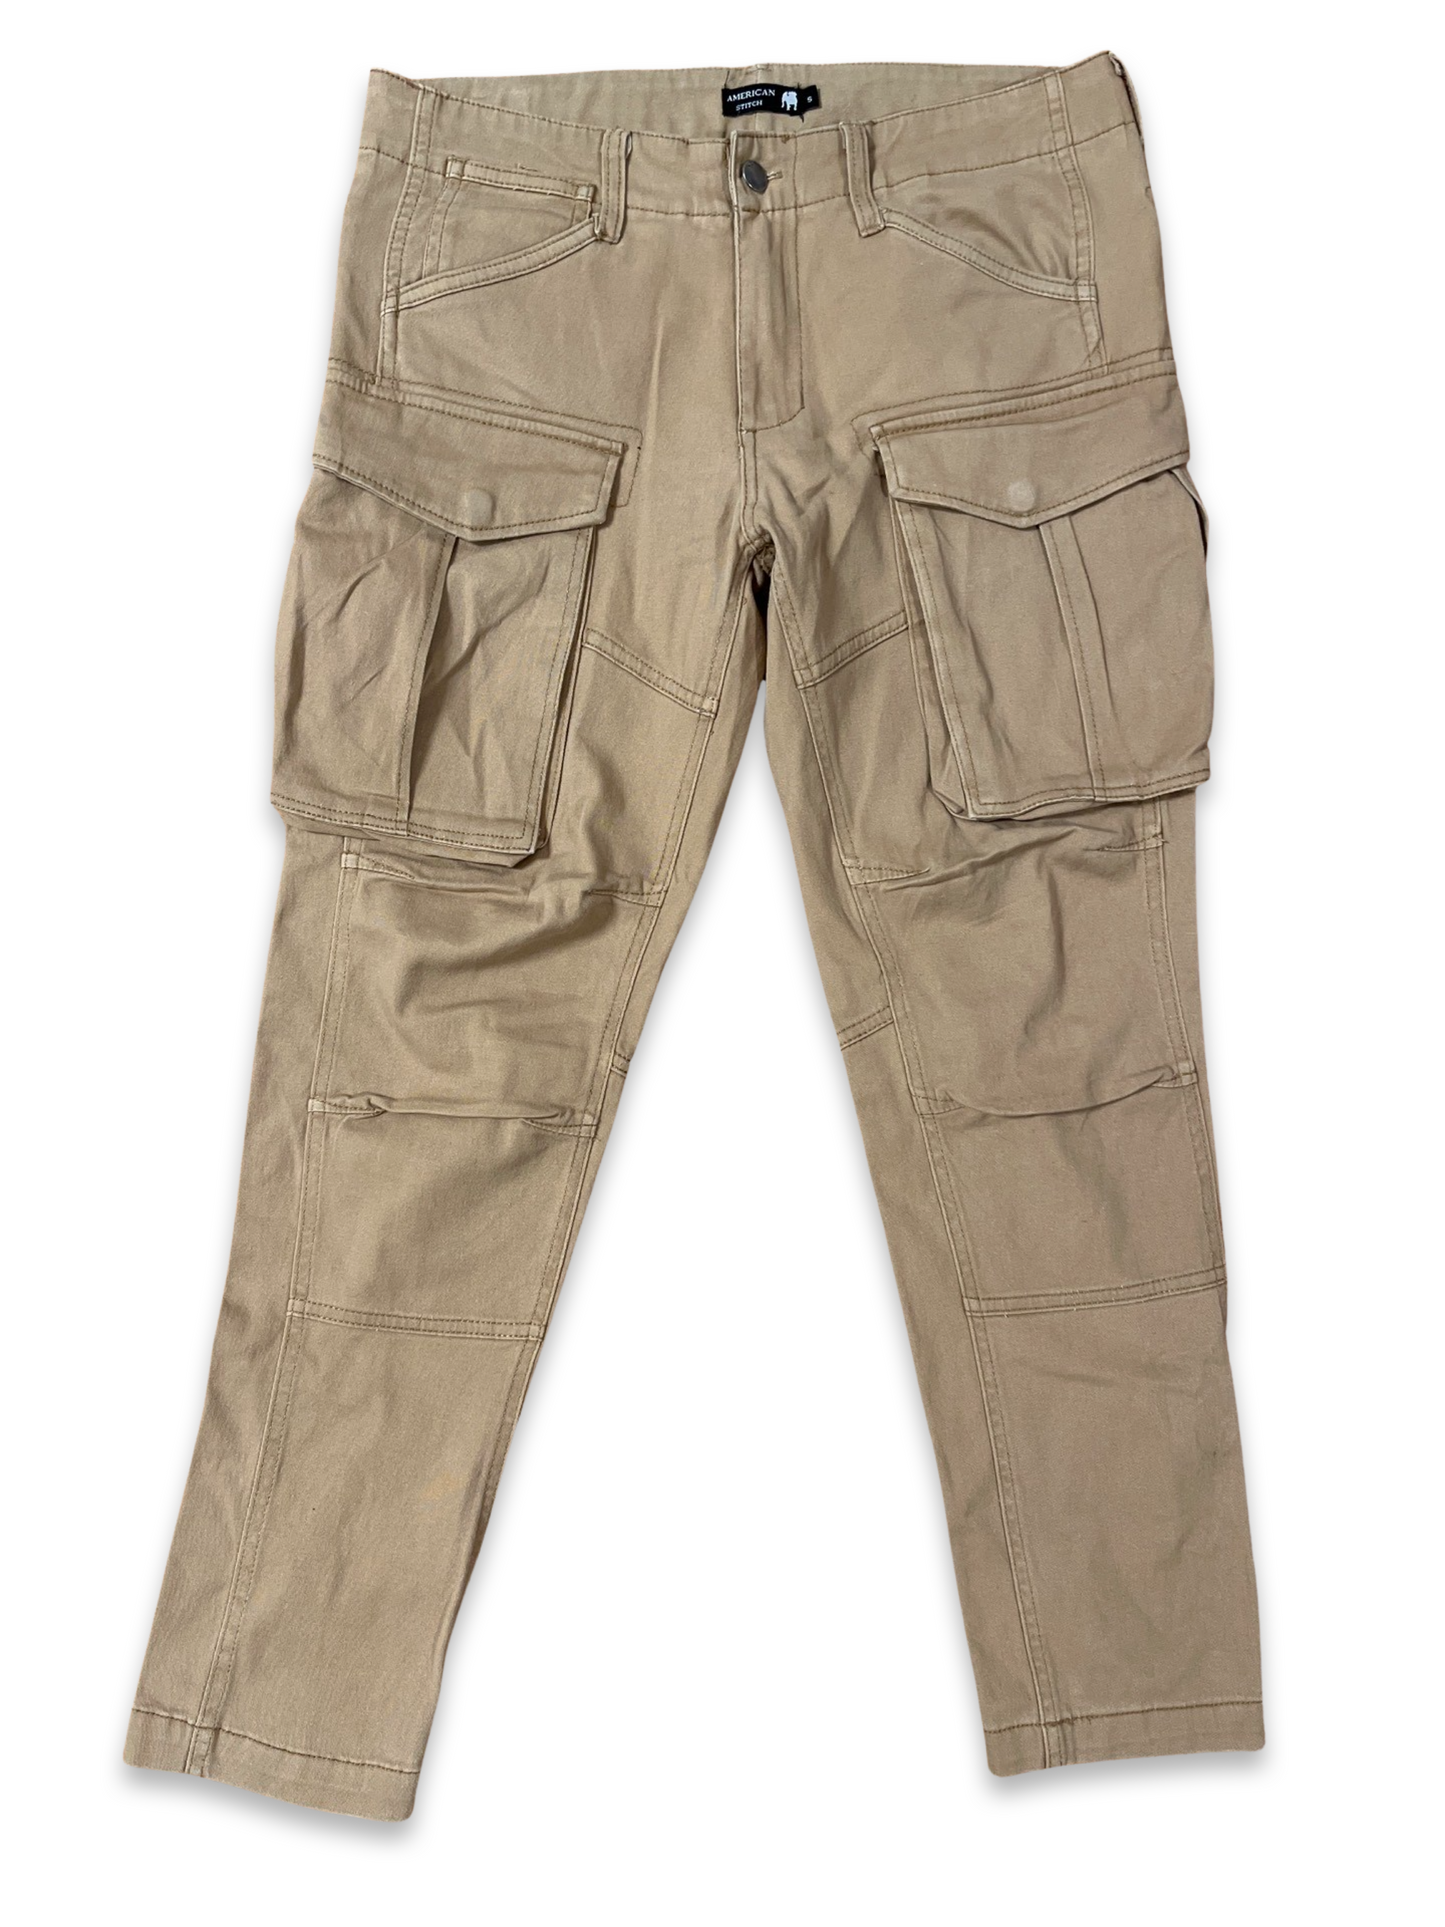 American Stitch Cargo Pants - Tan (S)